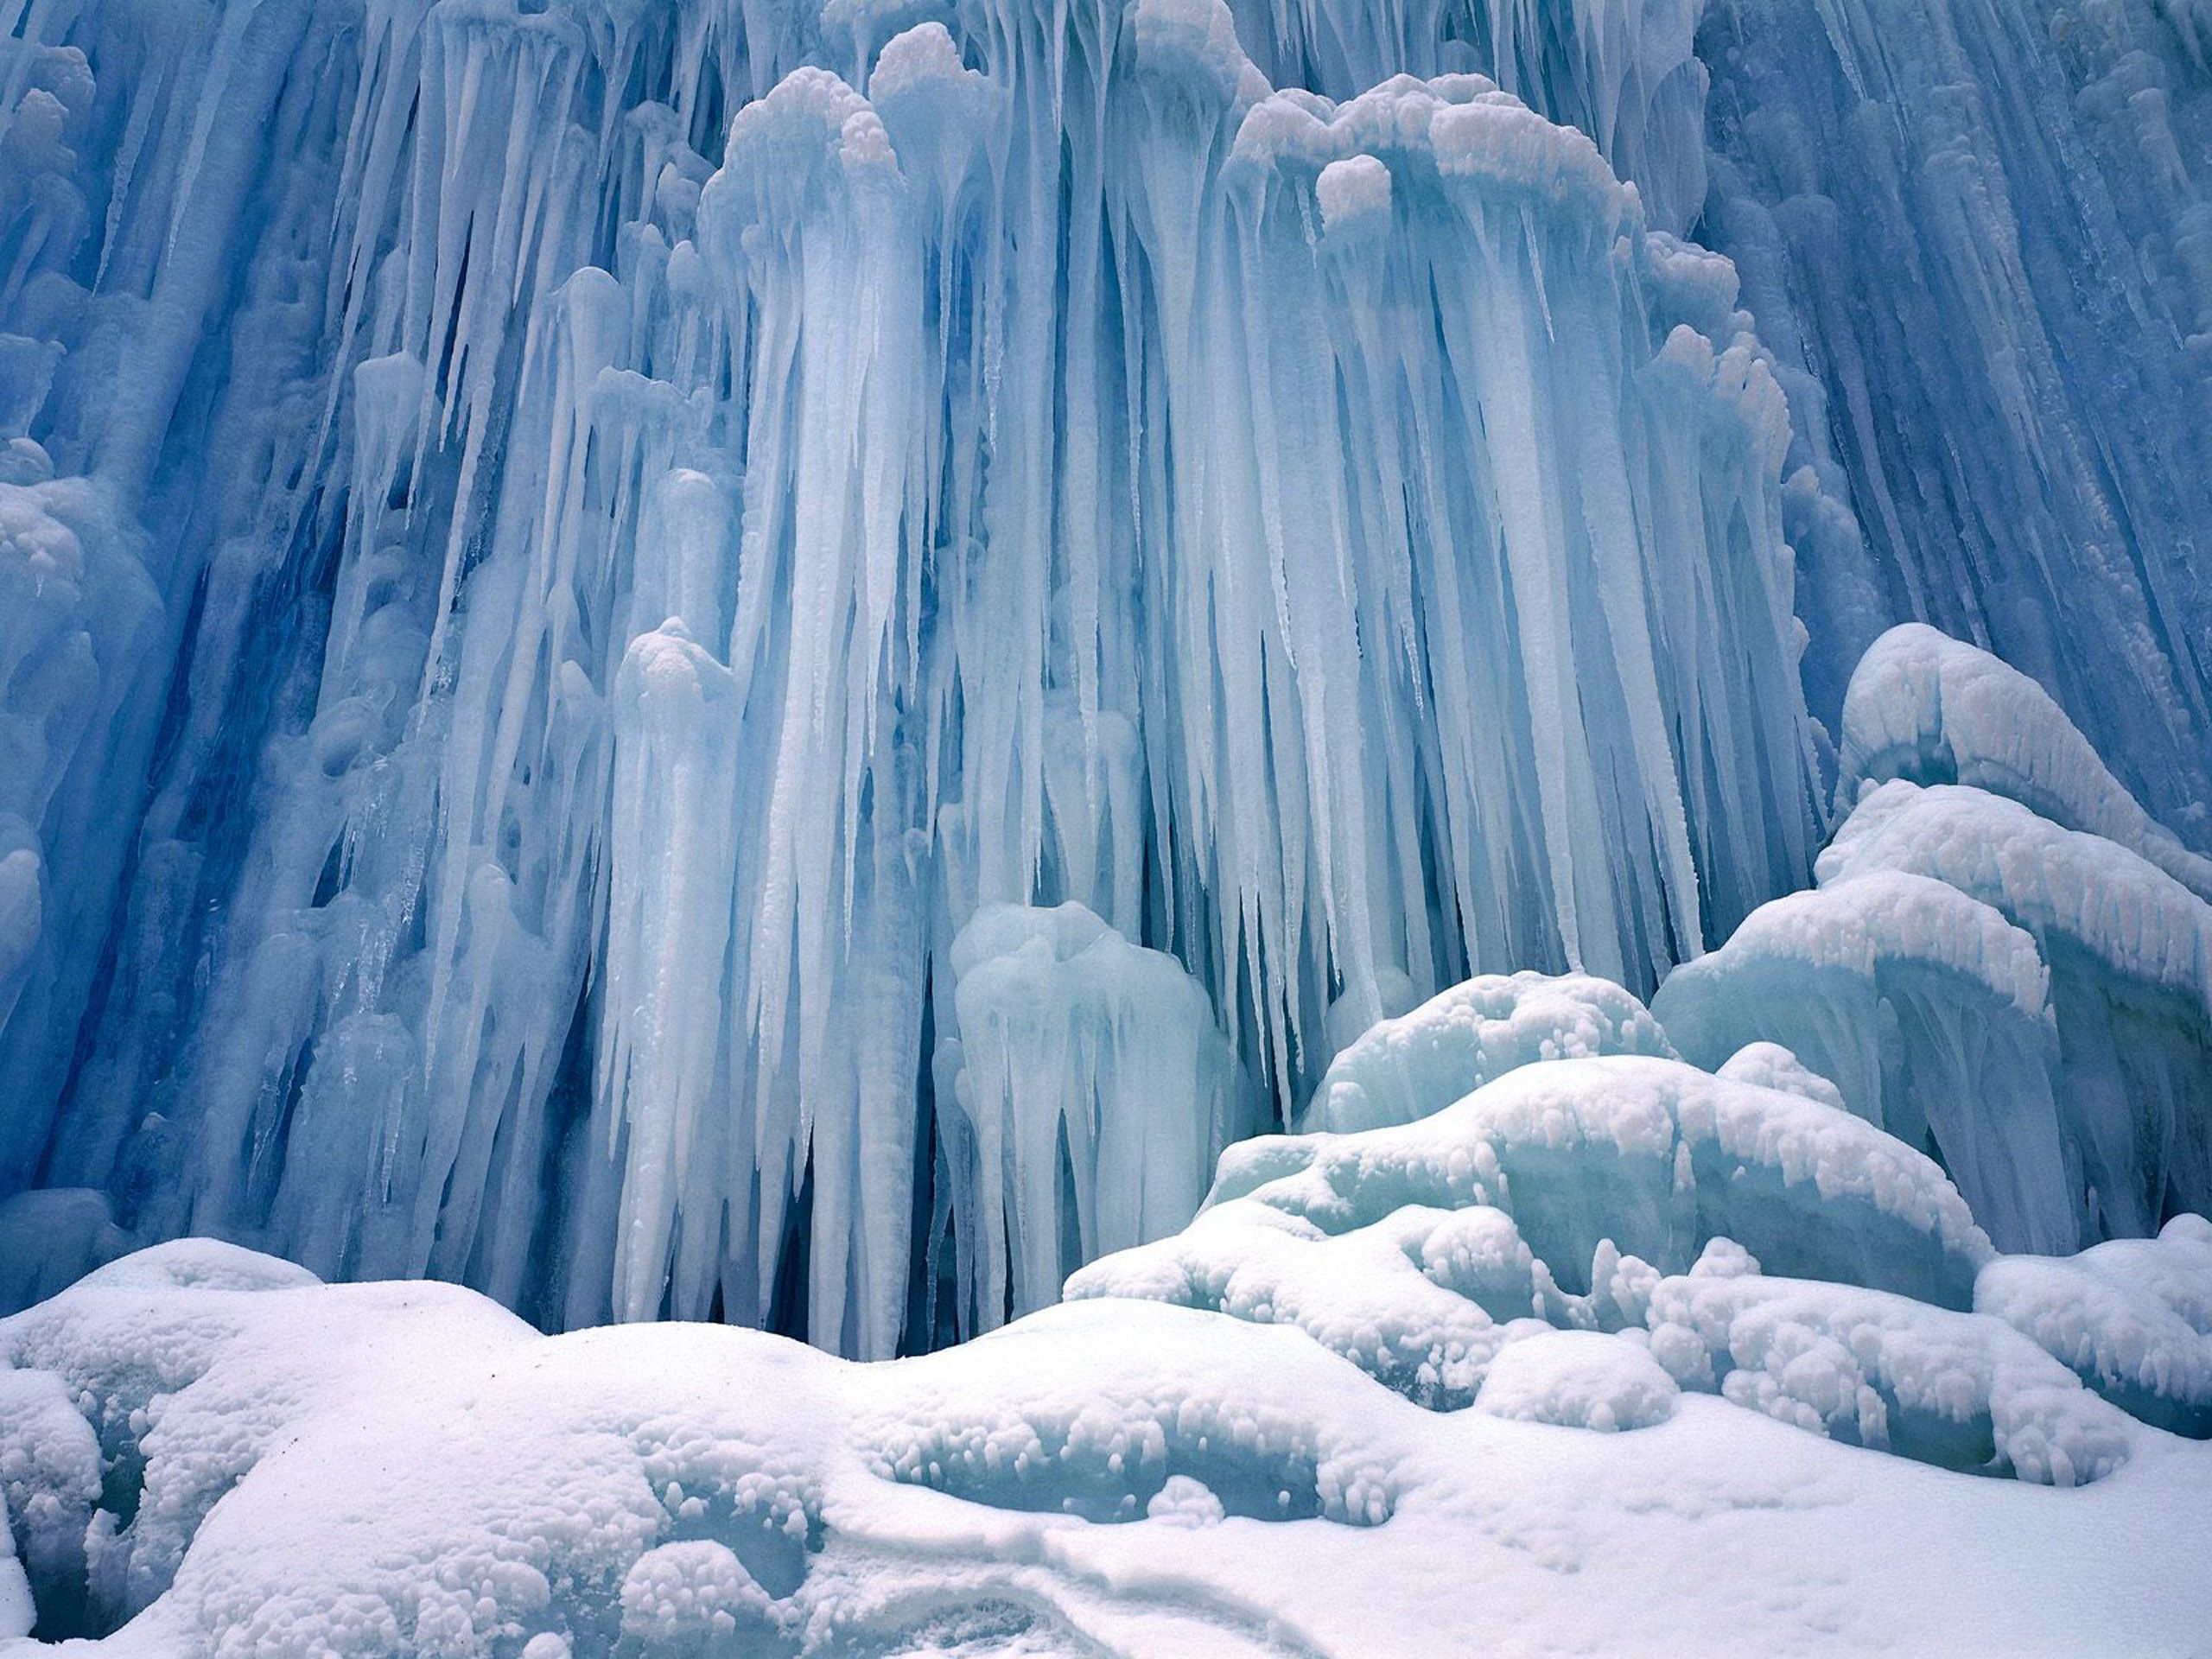 Winter Ice Scenes. Winter wallpaper, Winter nature, Winter scenes